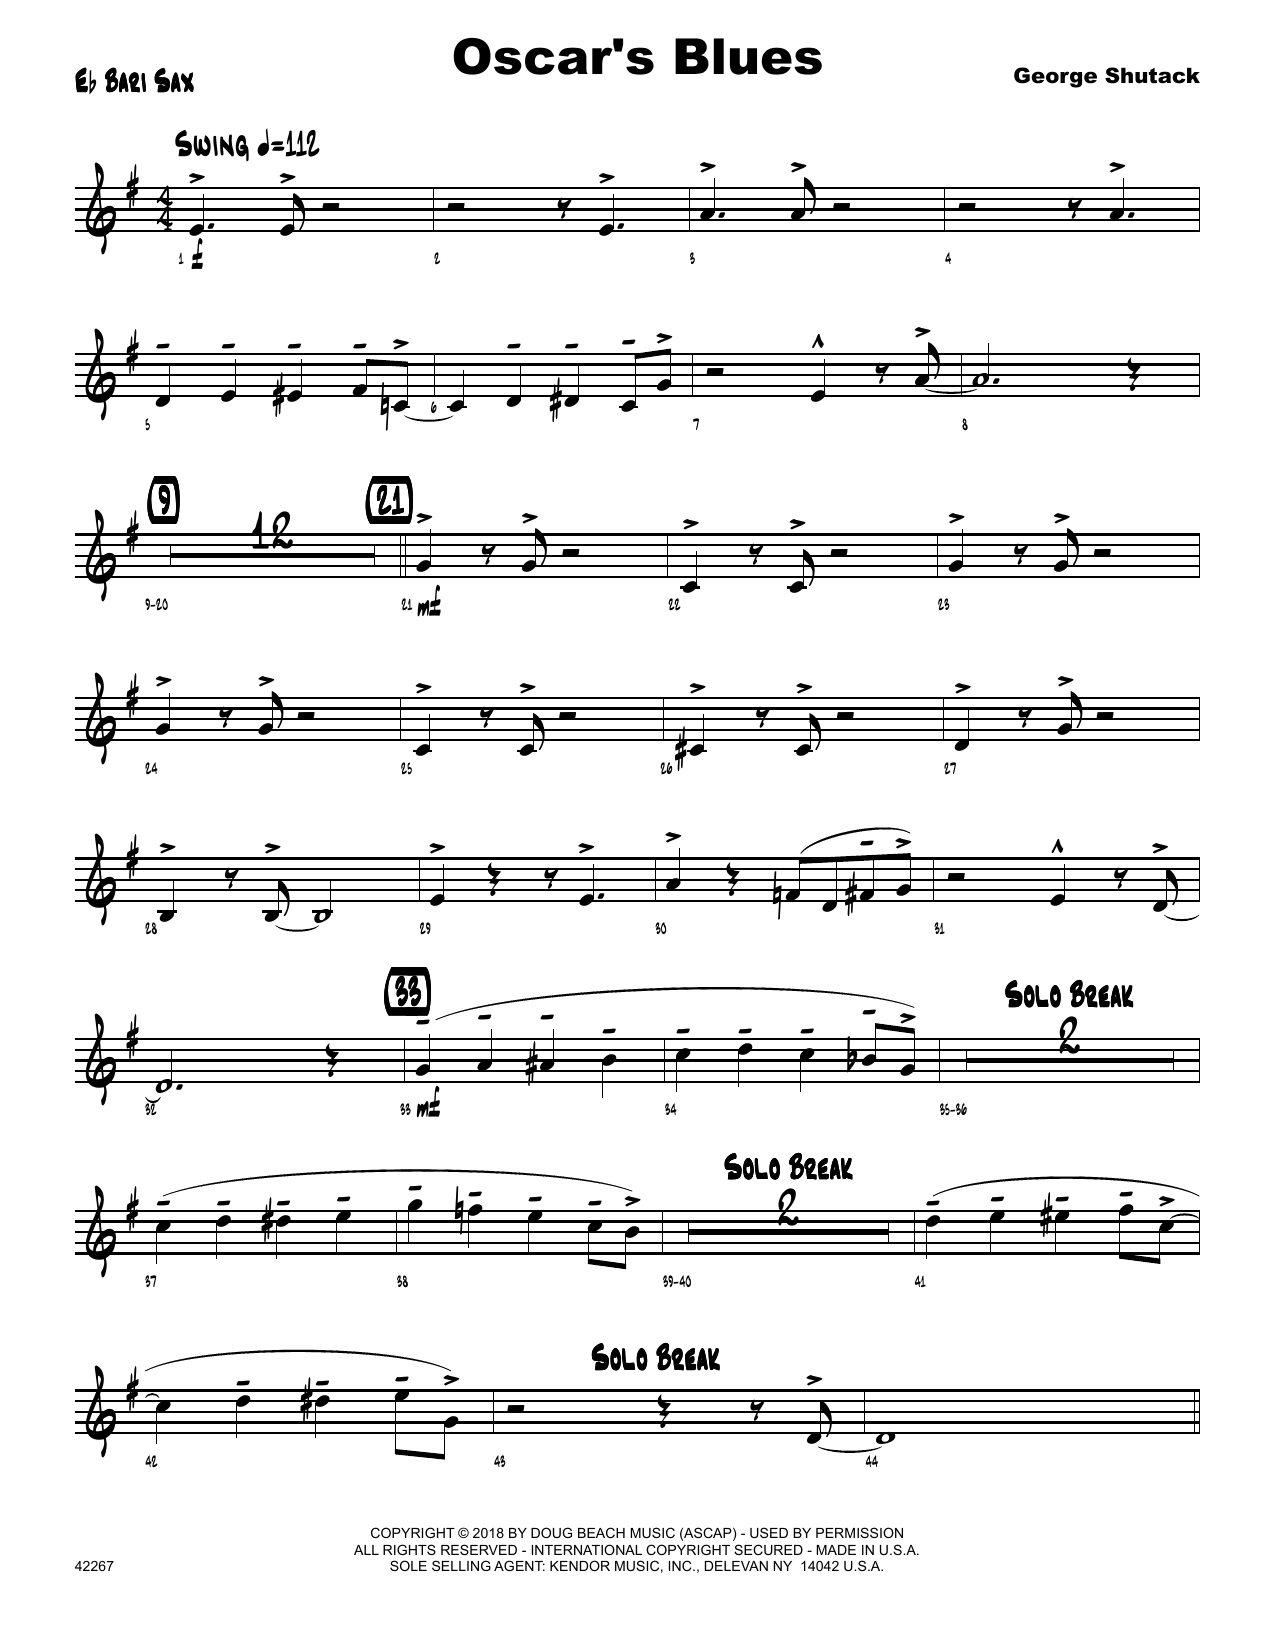 Download George Shutack Oscar's Blues - Eb Baritone Saxophone Sheet Music